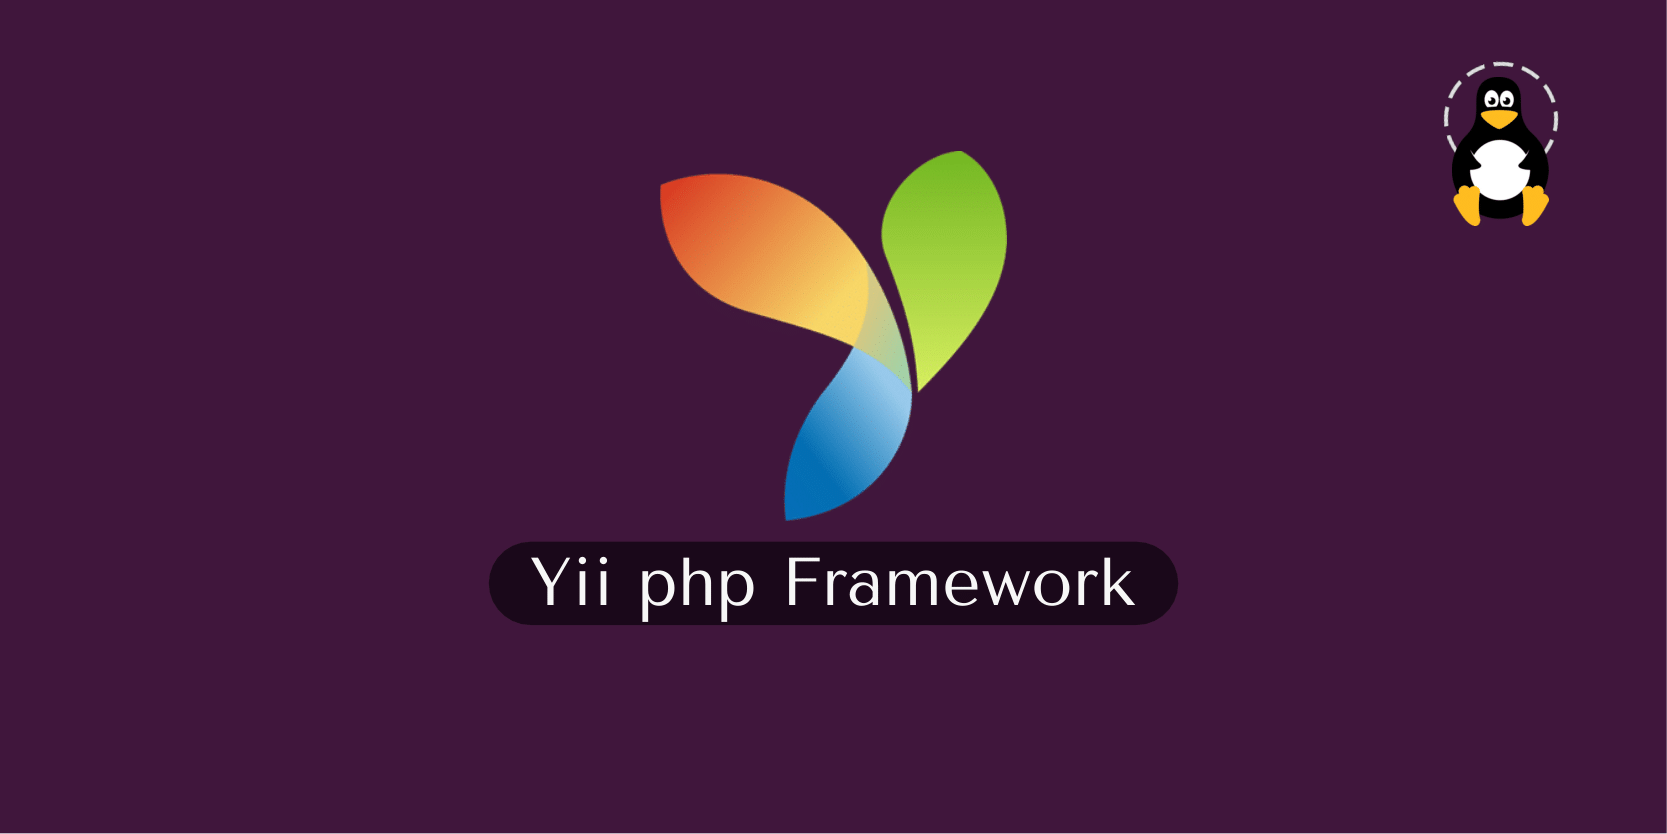 How to Install Yii PHP framework on Ubuntu 20.04